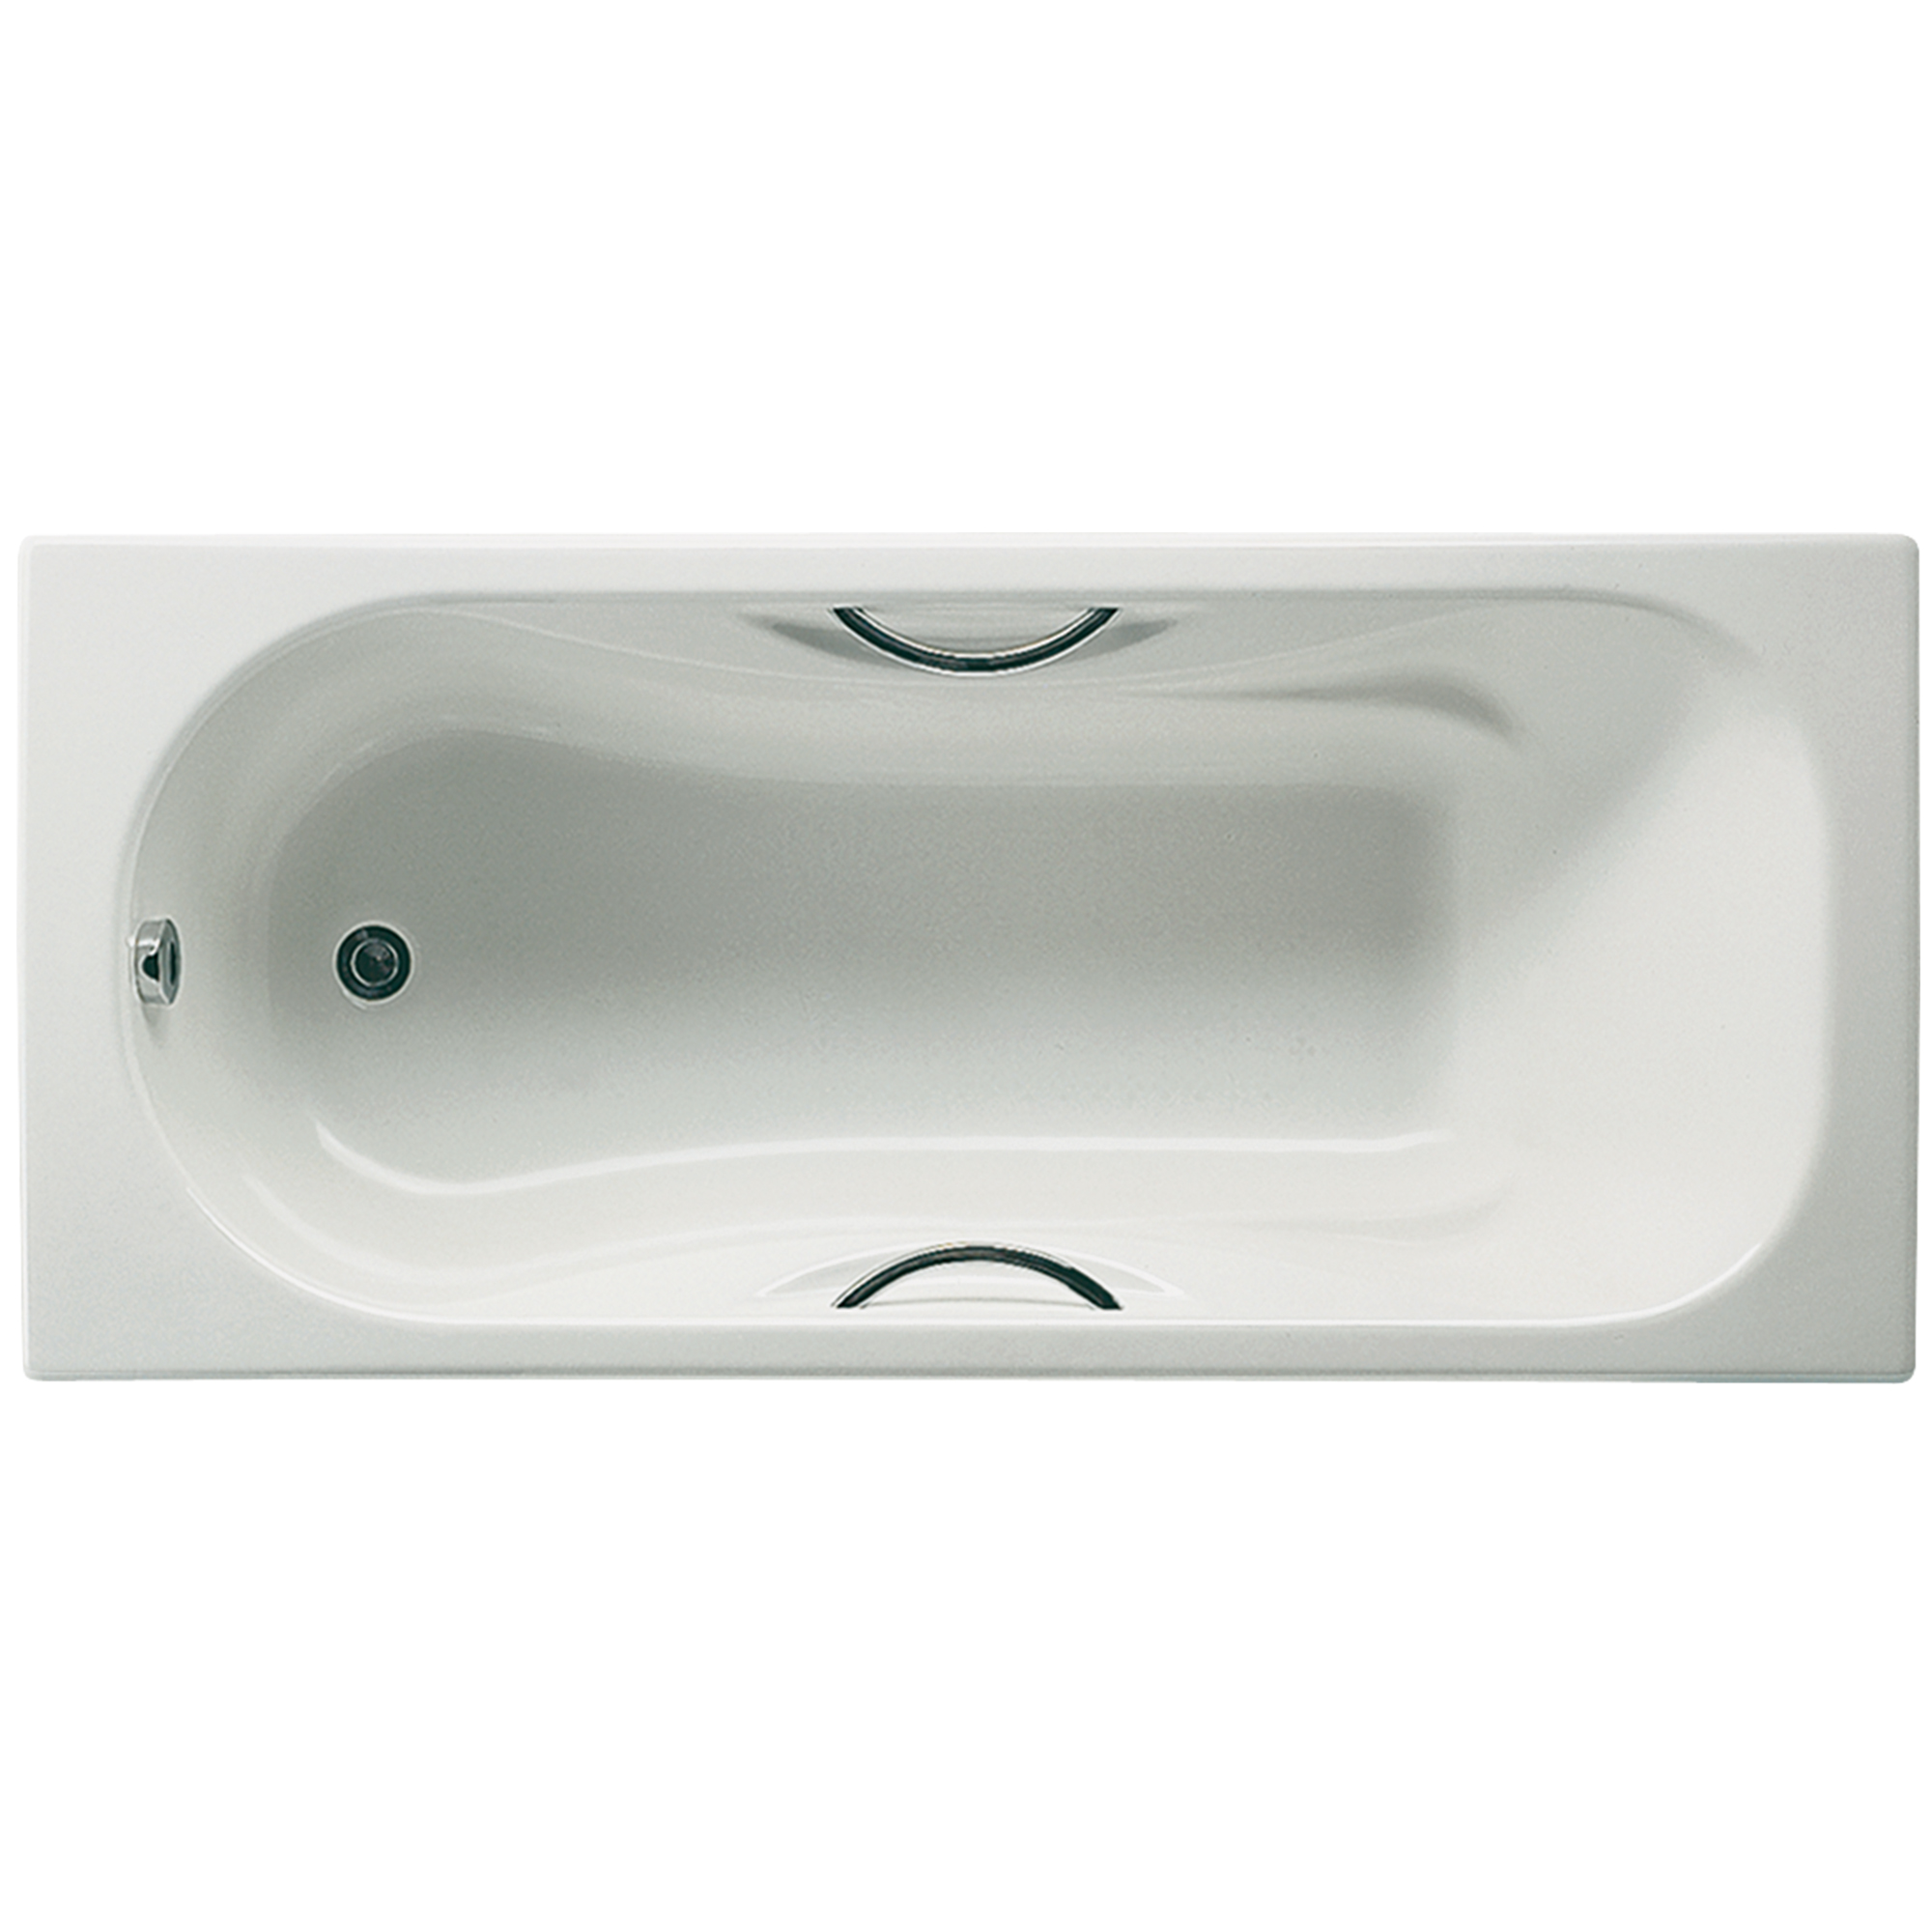 Чугунная ванна Roca Malibu 170х75, размер 170x75, цвет белый 7.2309.G.000.R - фото 1